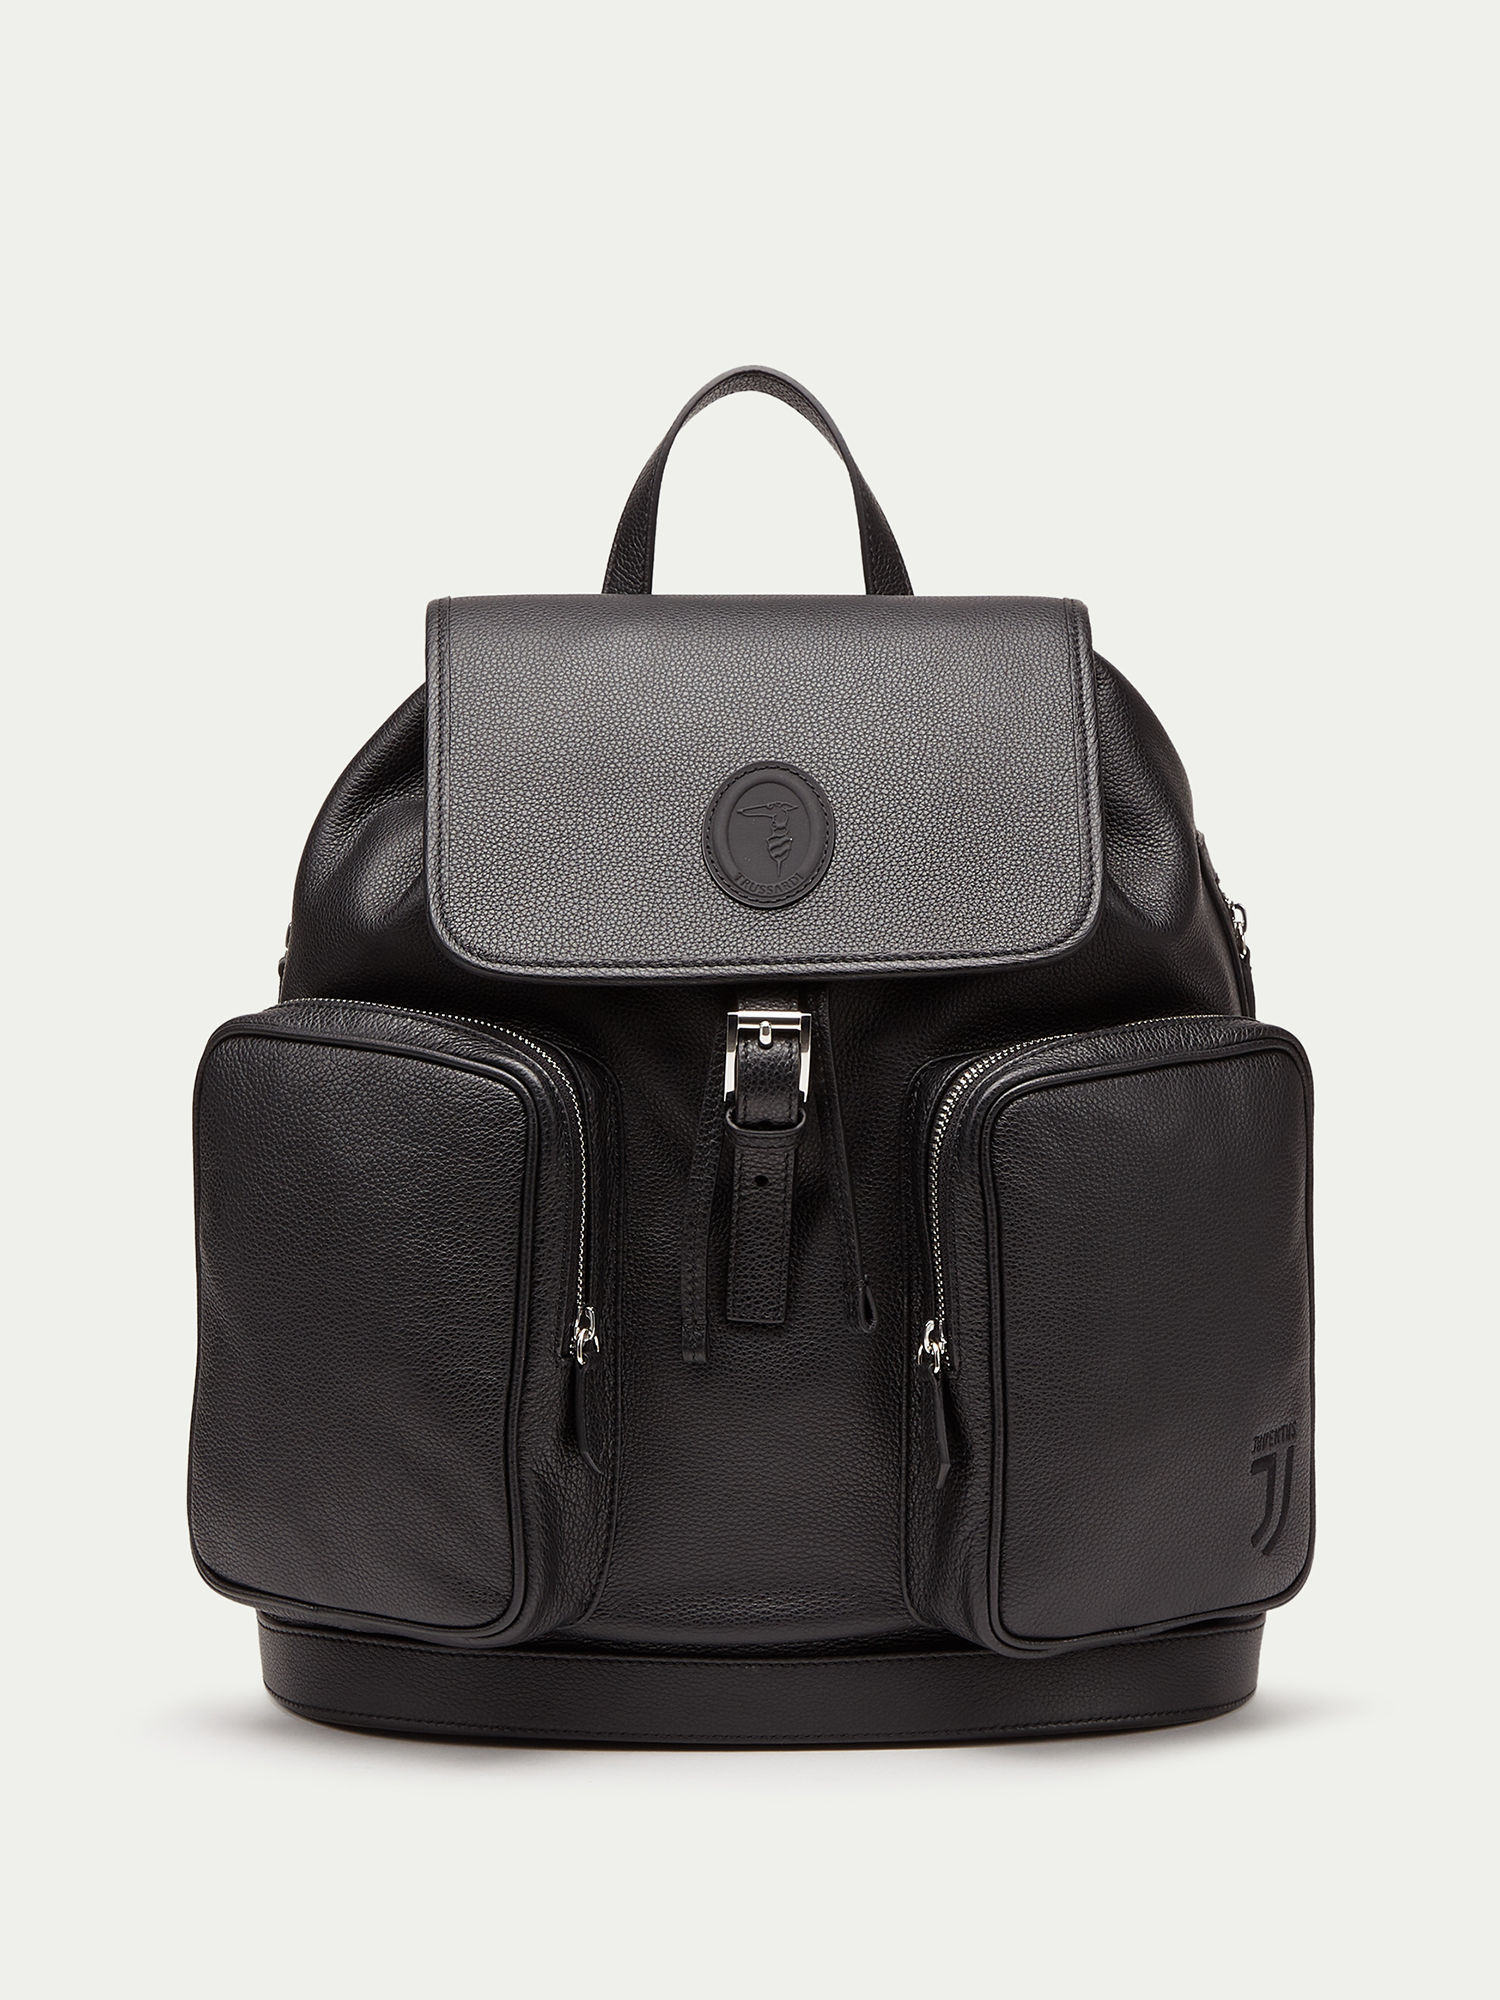 Trussardi Leather Backpack - Gentleman's Gadgets